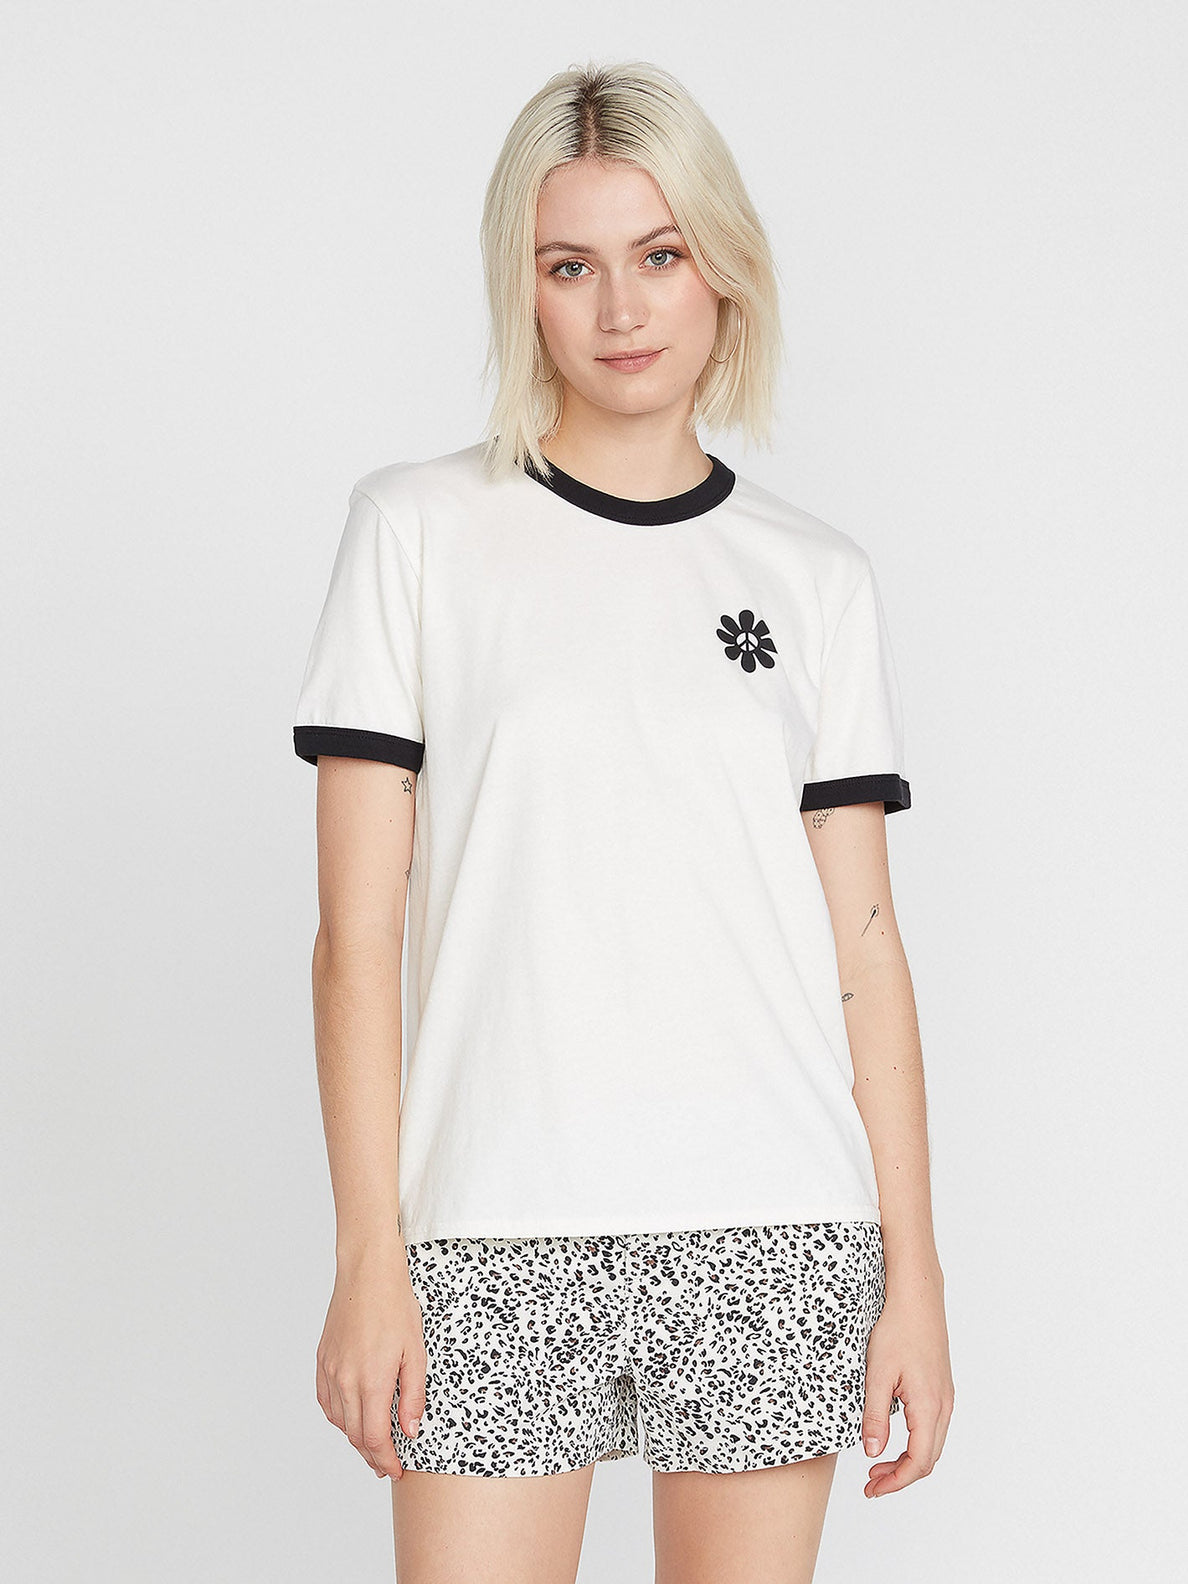 Truly Ringer T-shirt - STAR WHITE (B3532202_SWH) [B]